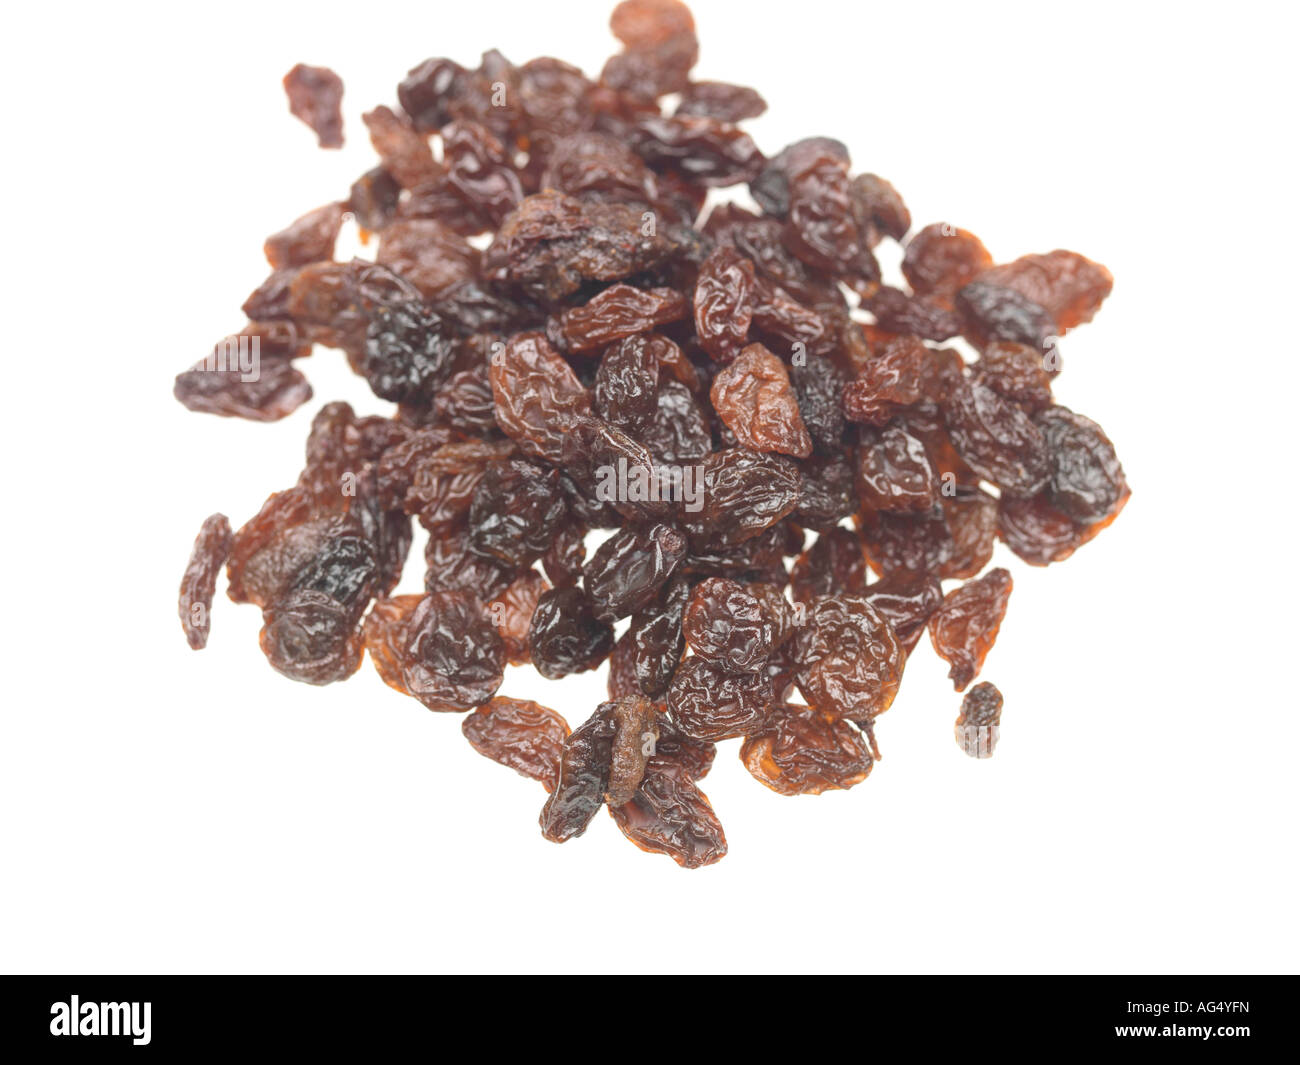 Raisins raisin pile piles dried fruit fruits healthy snack food hi-res ...